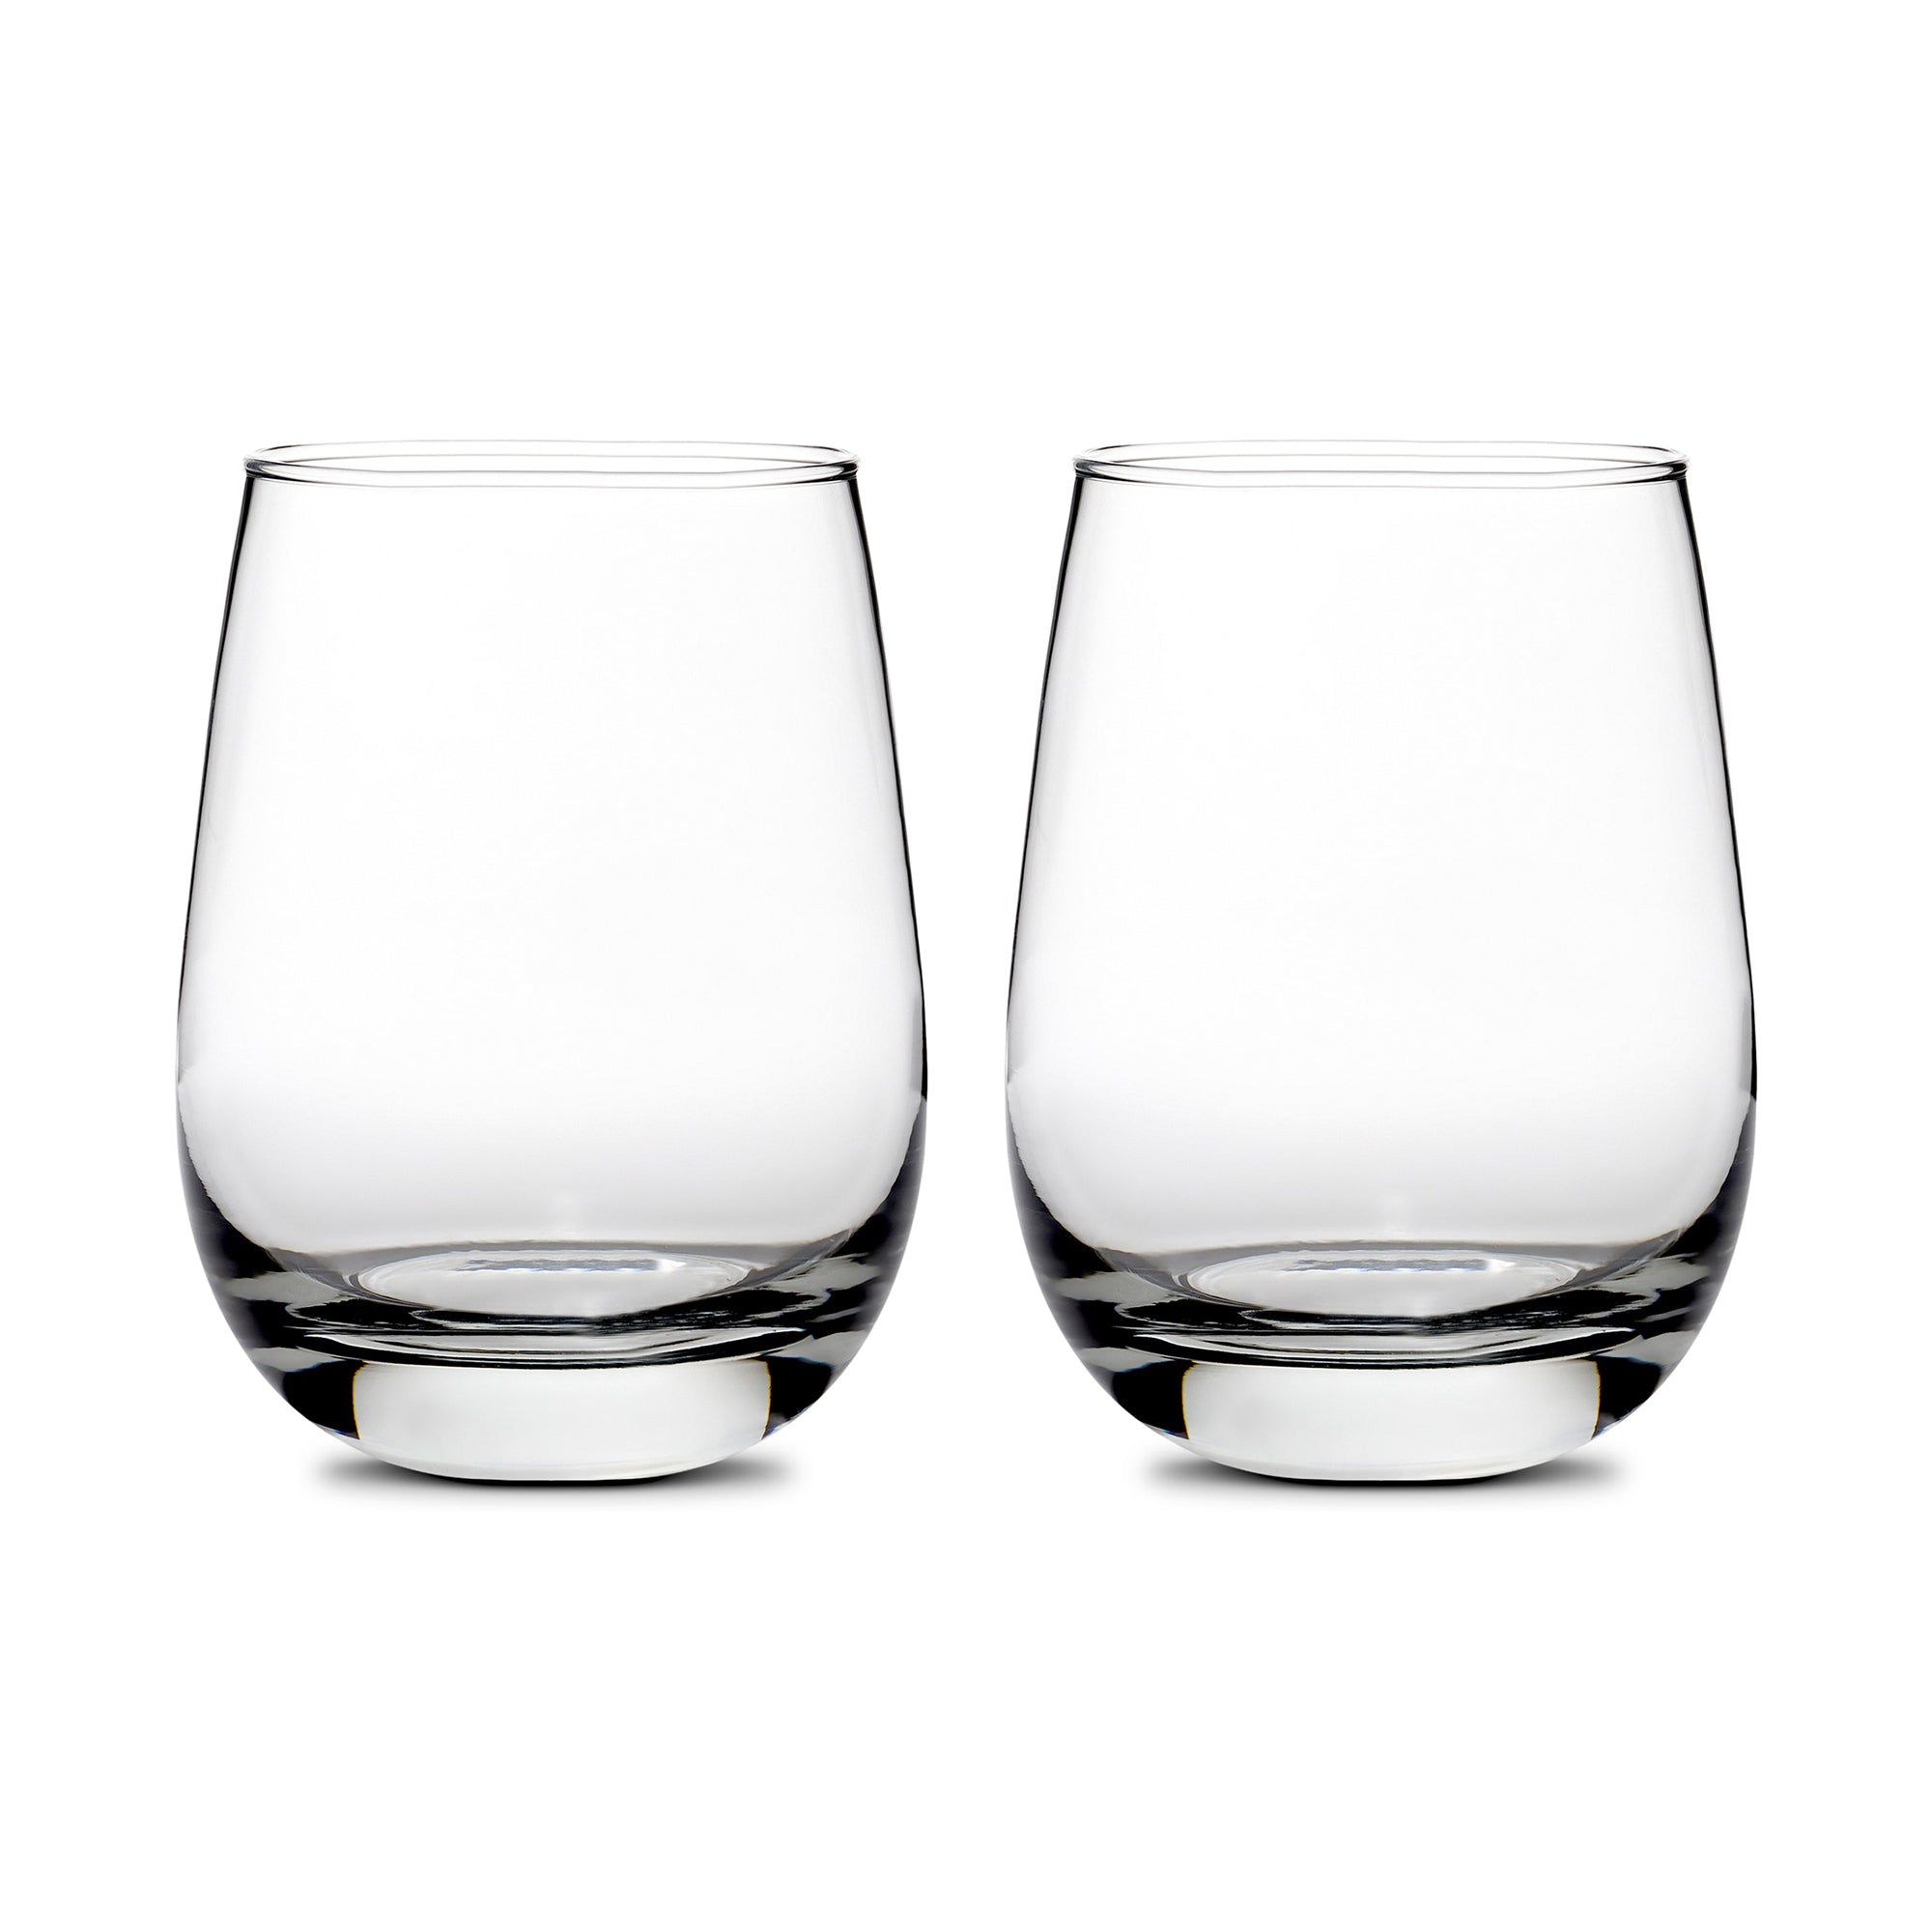 Integrity Bottles, Customizable (Set of 2) Premium Stemless Wine Glasses, 16oz